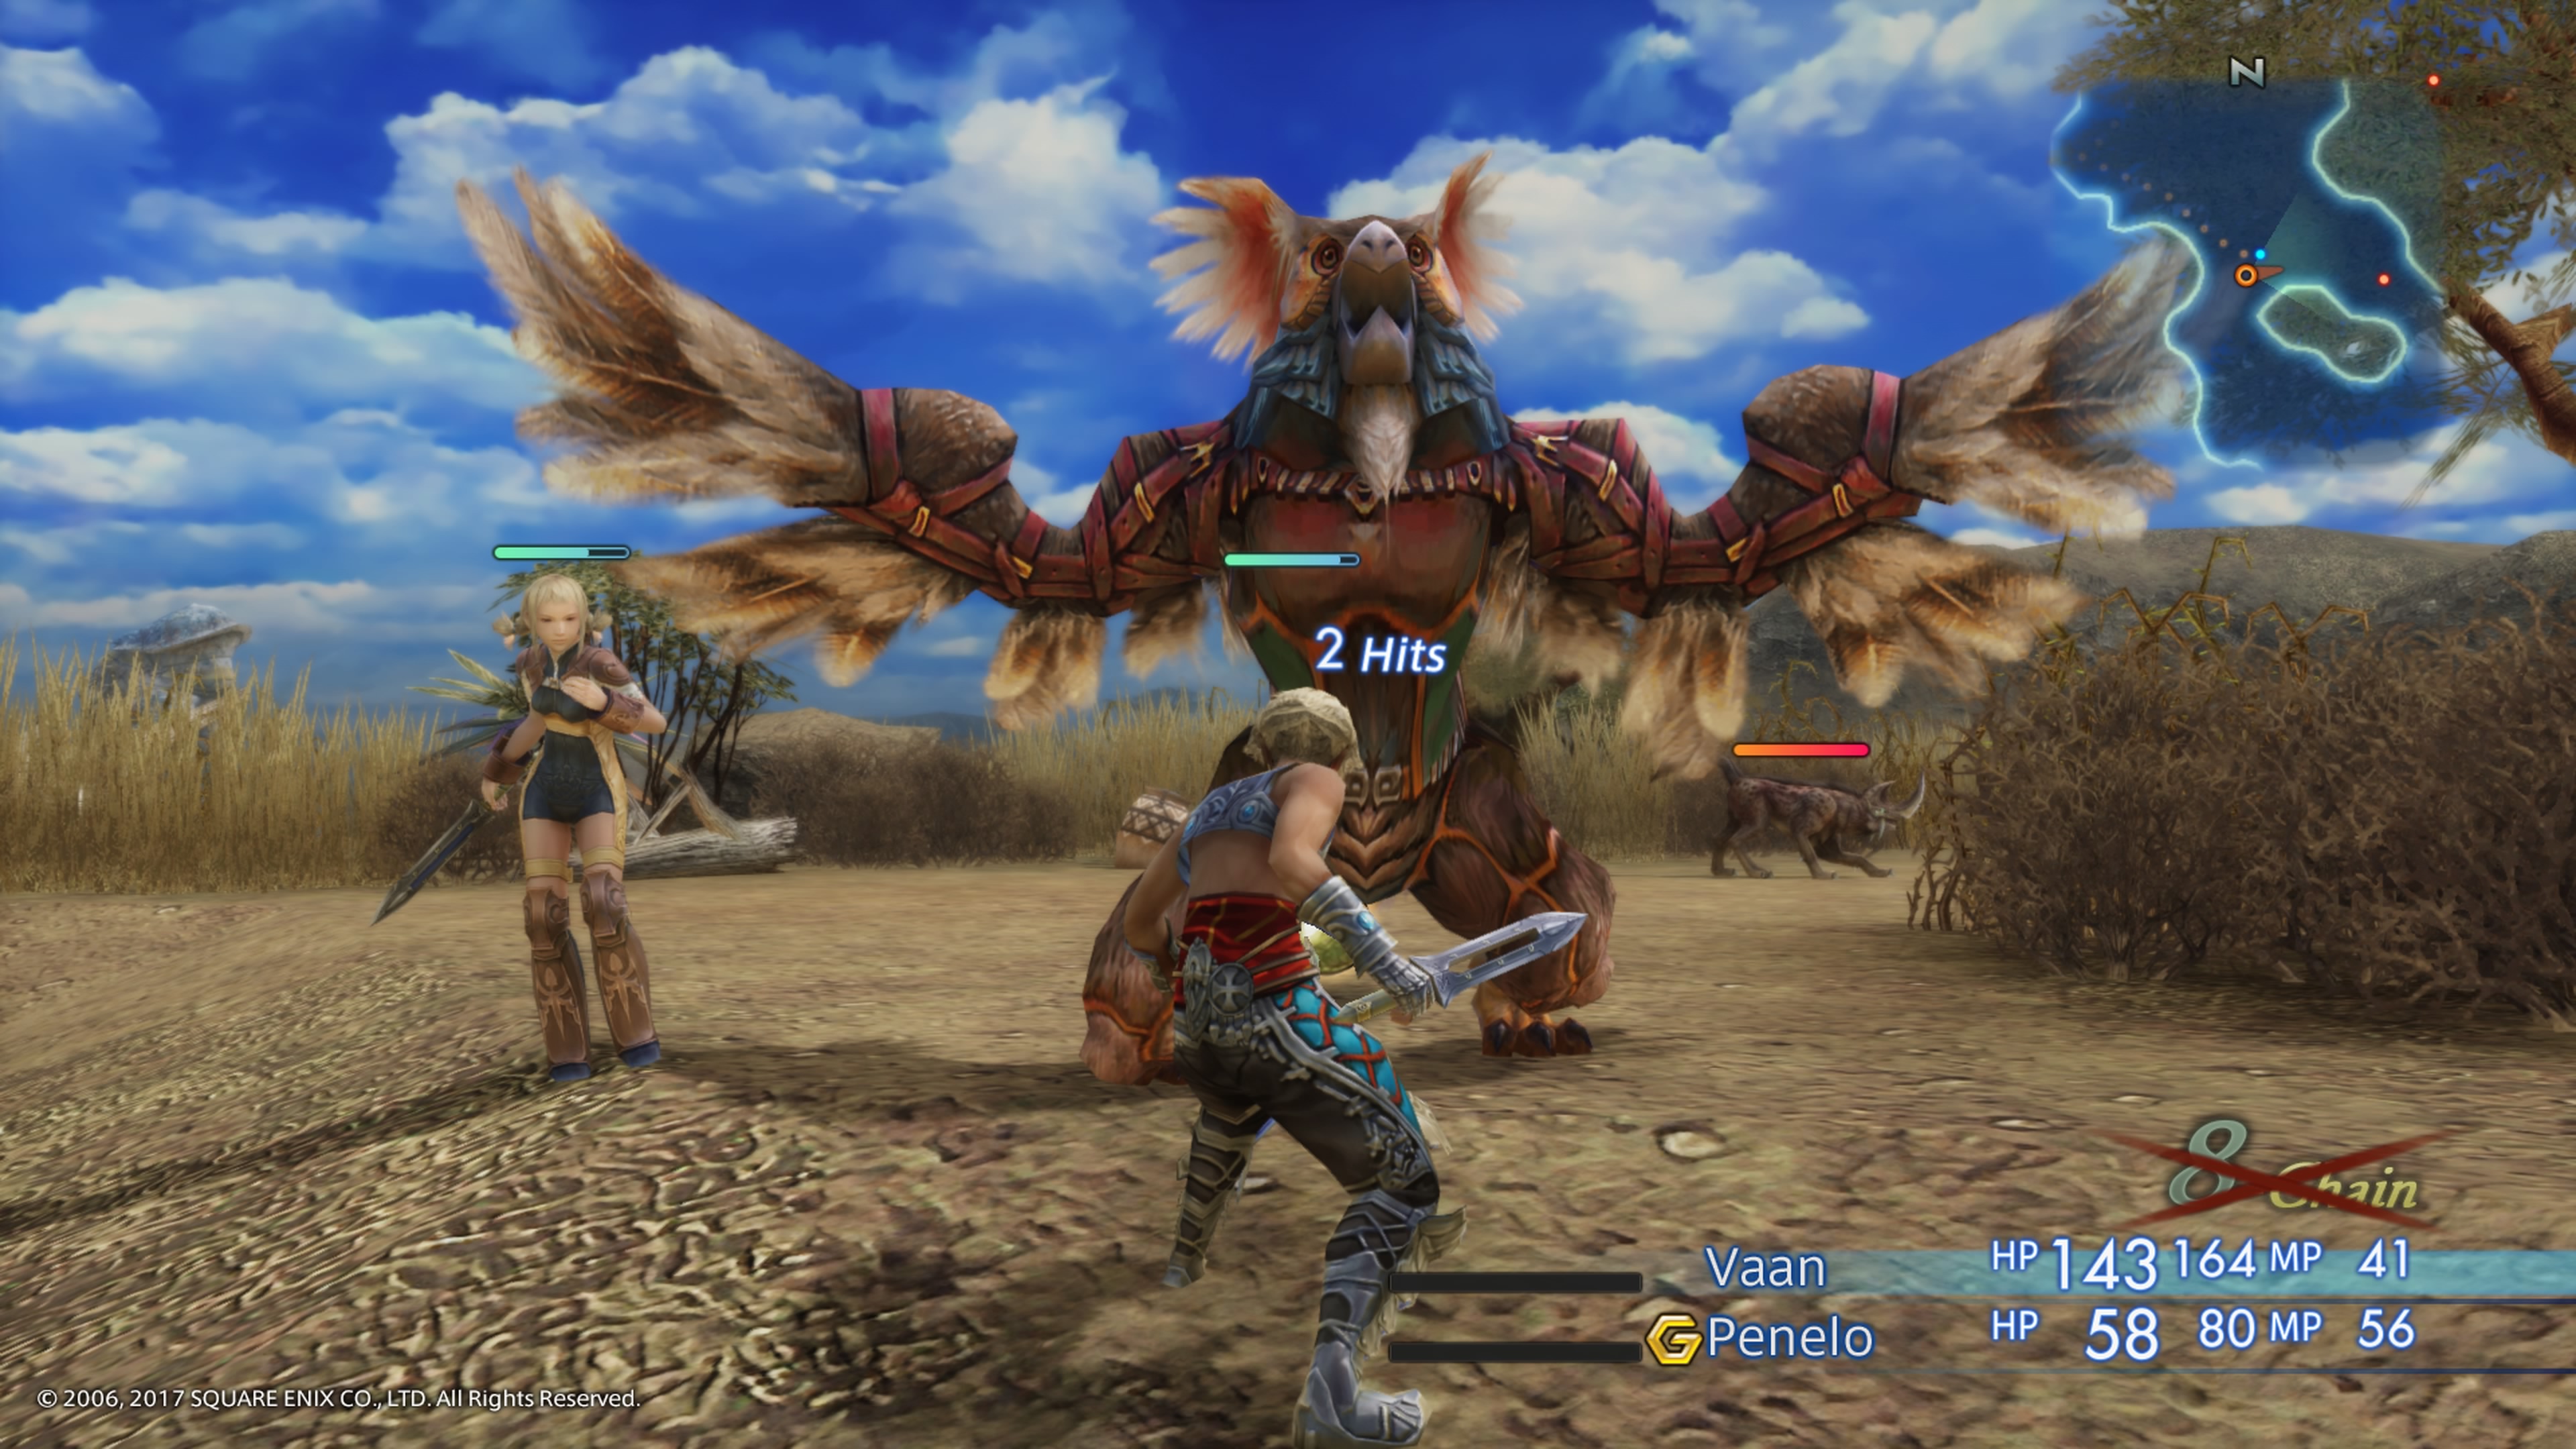 Final Fantasy Xii The Zodiac Age Announced For Pc Guru3d Forums